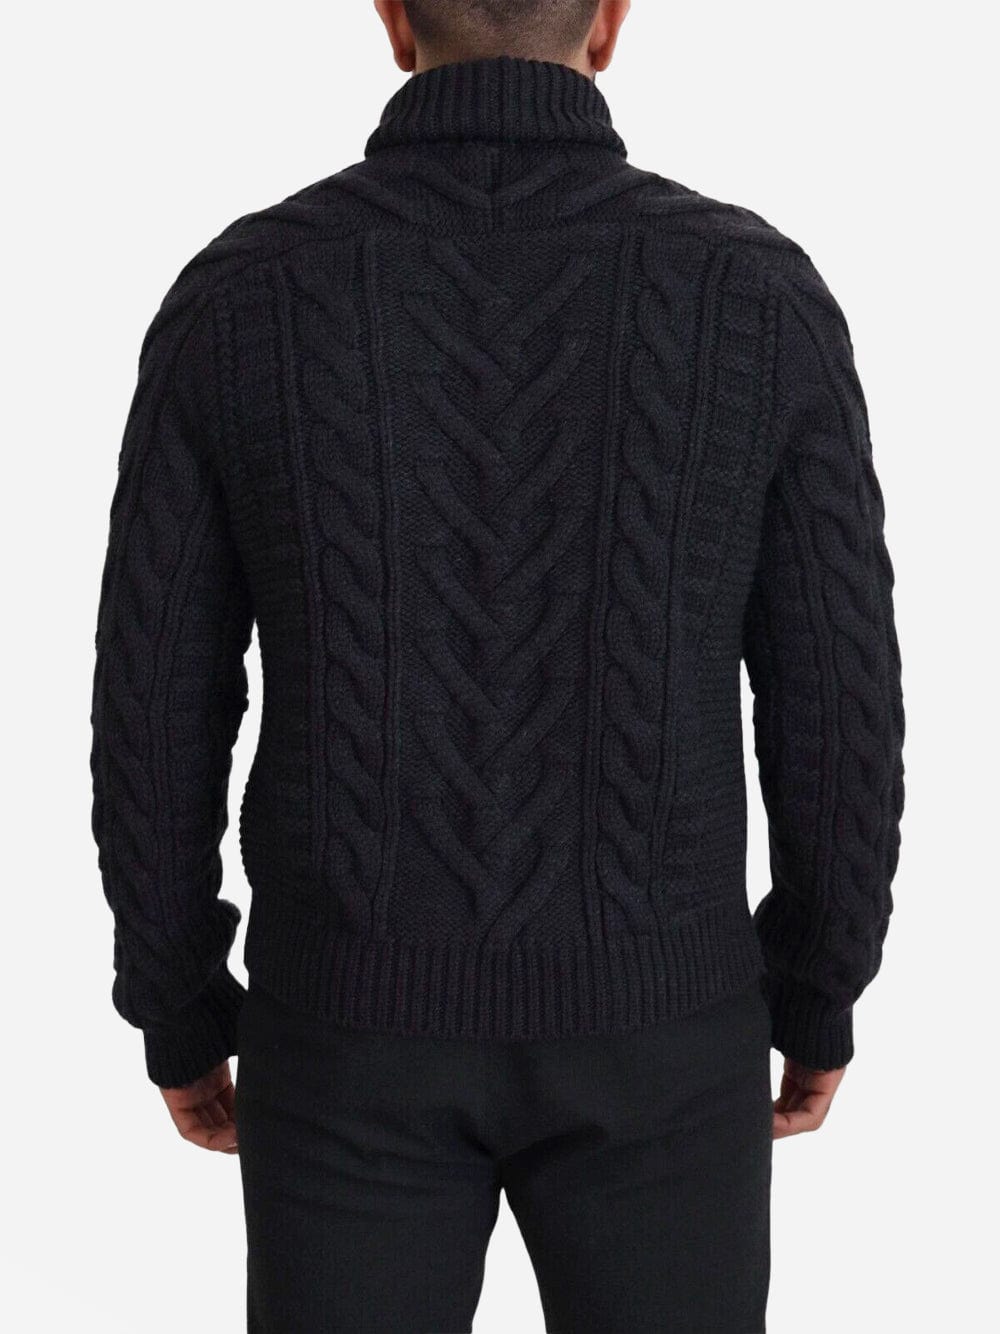 Dolce & Gabbana Knitted Turtleneck Sweater